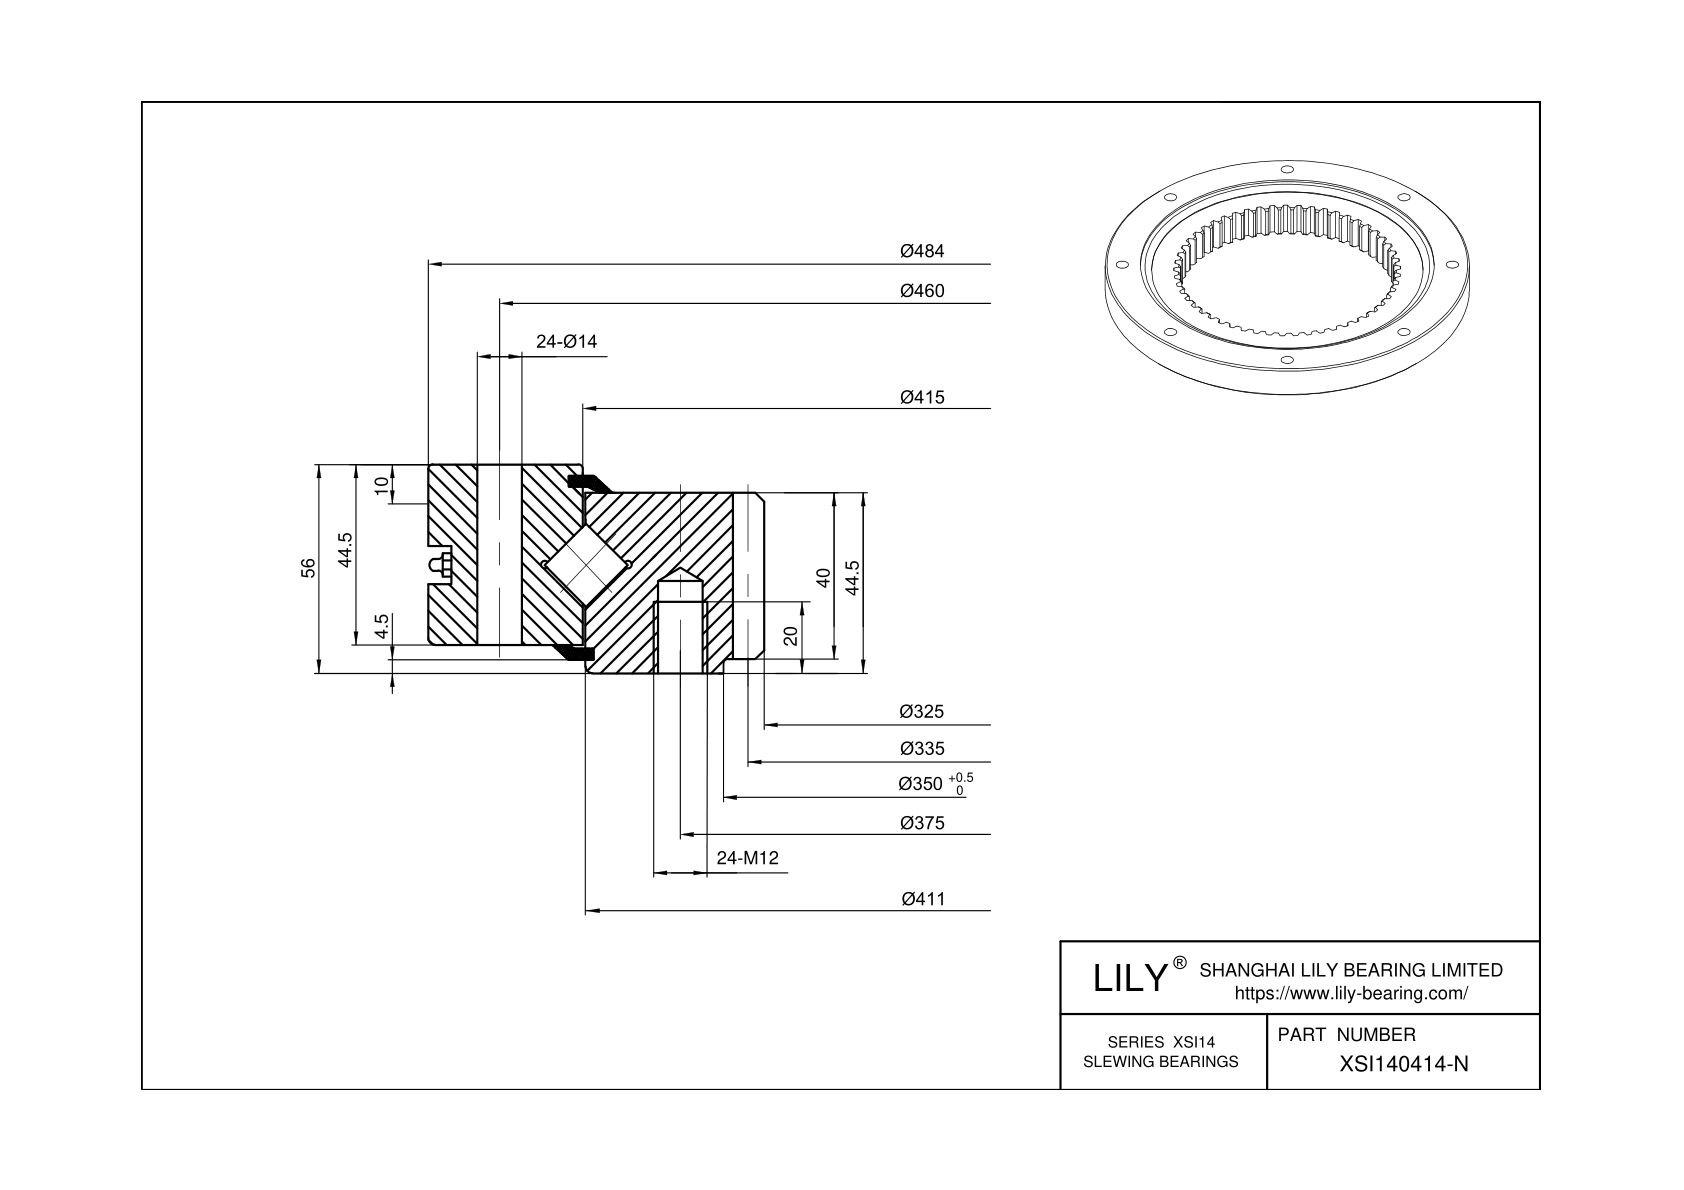 XSI140414-N Cross Roller Slewing Ring Bearing cad drawing